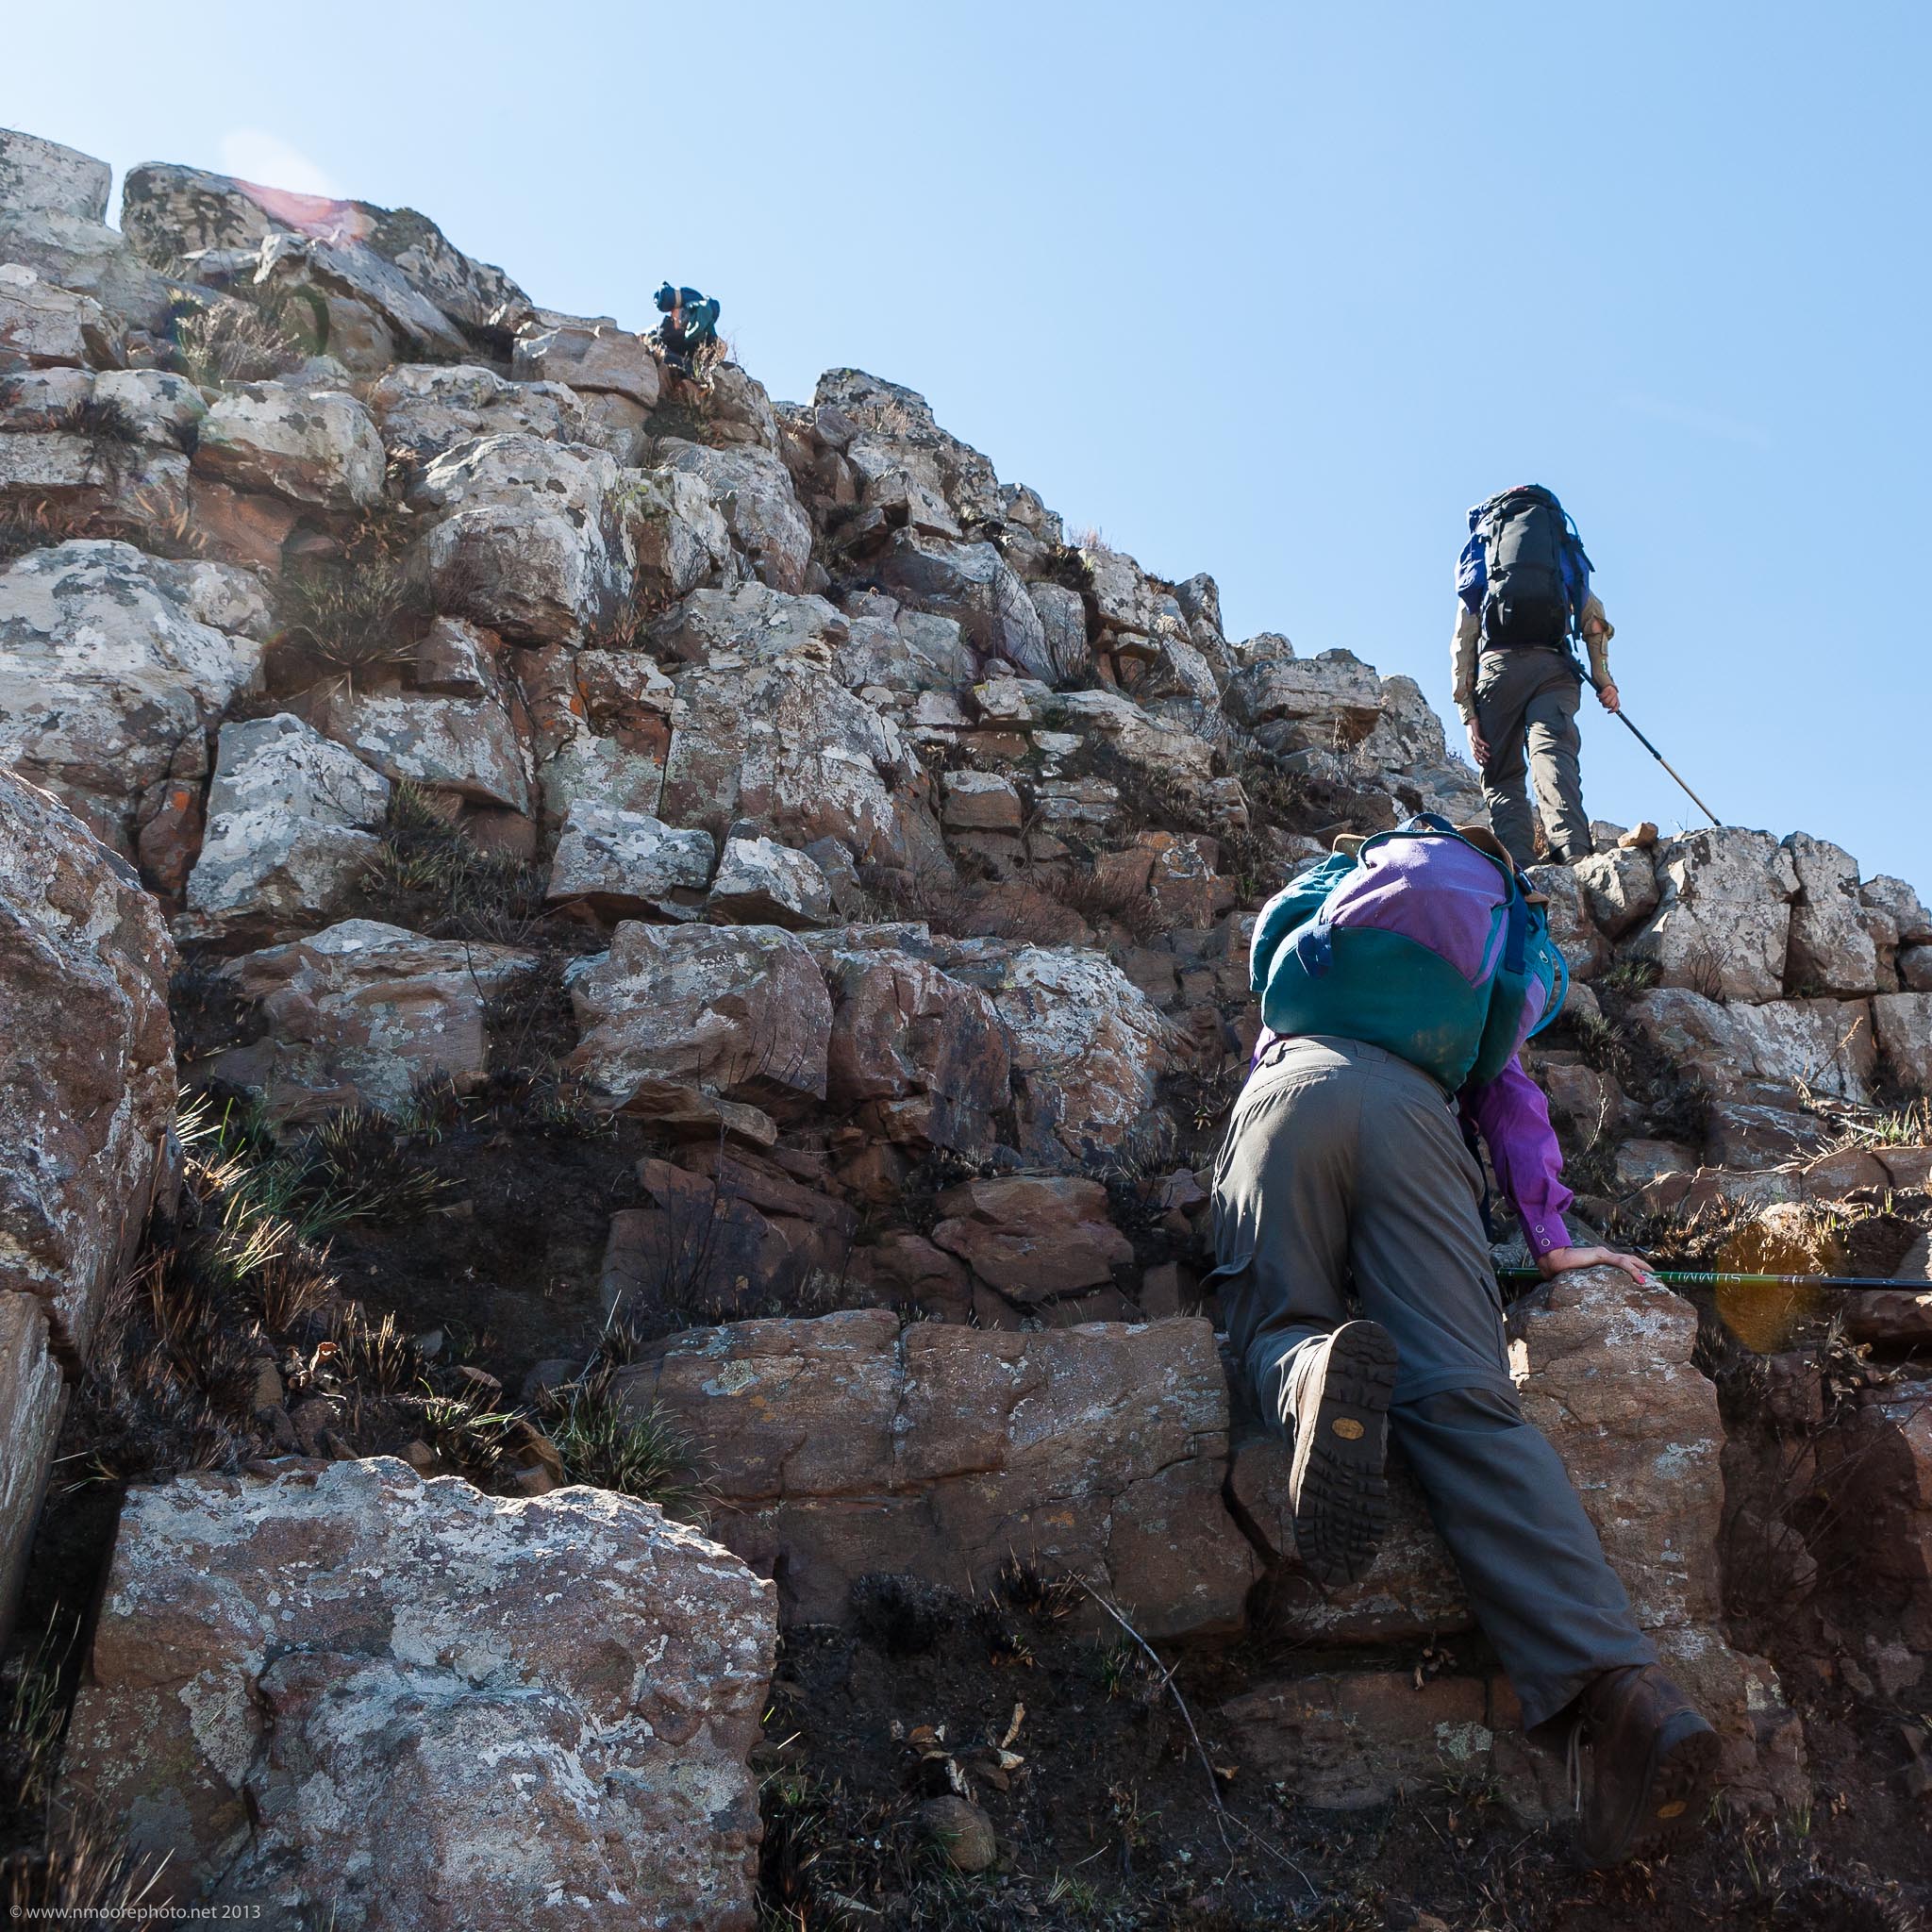 Ascending Goudkoppie's cliffs